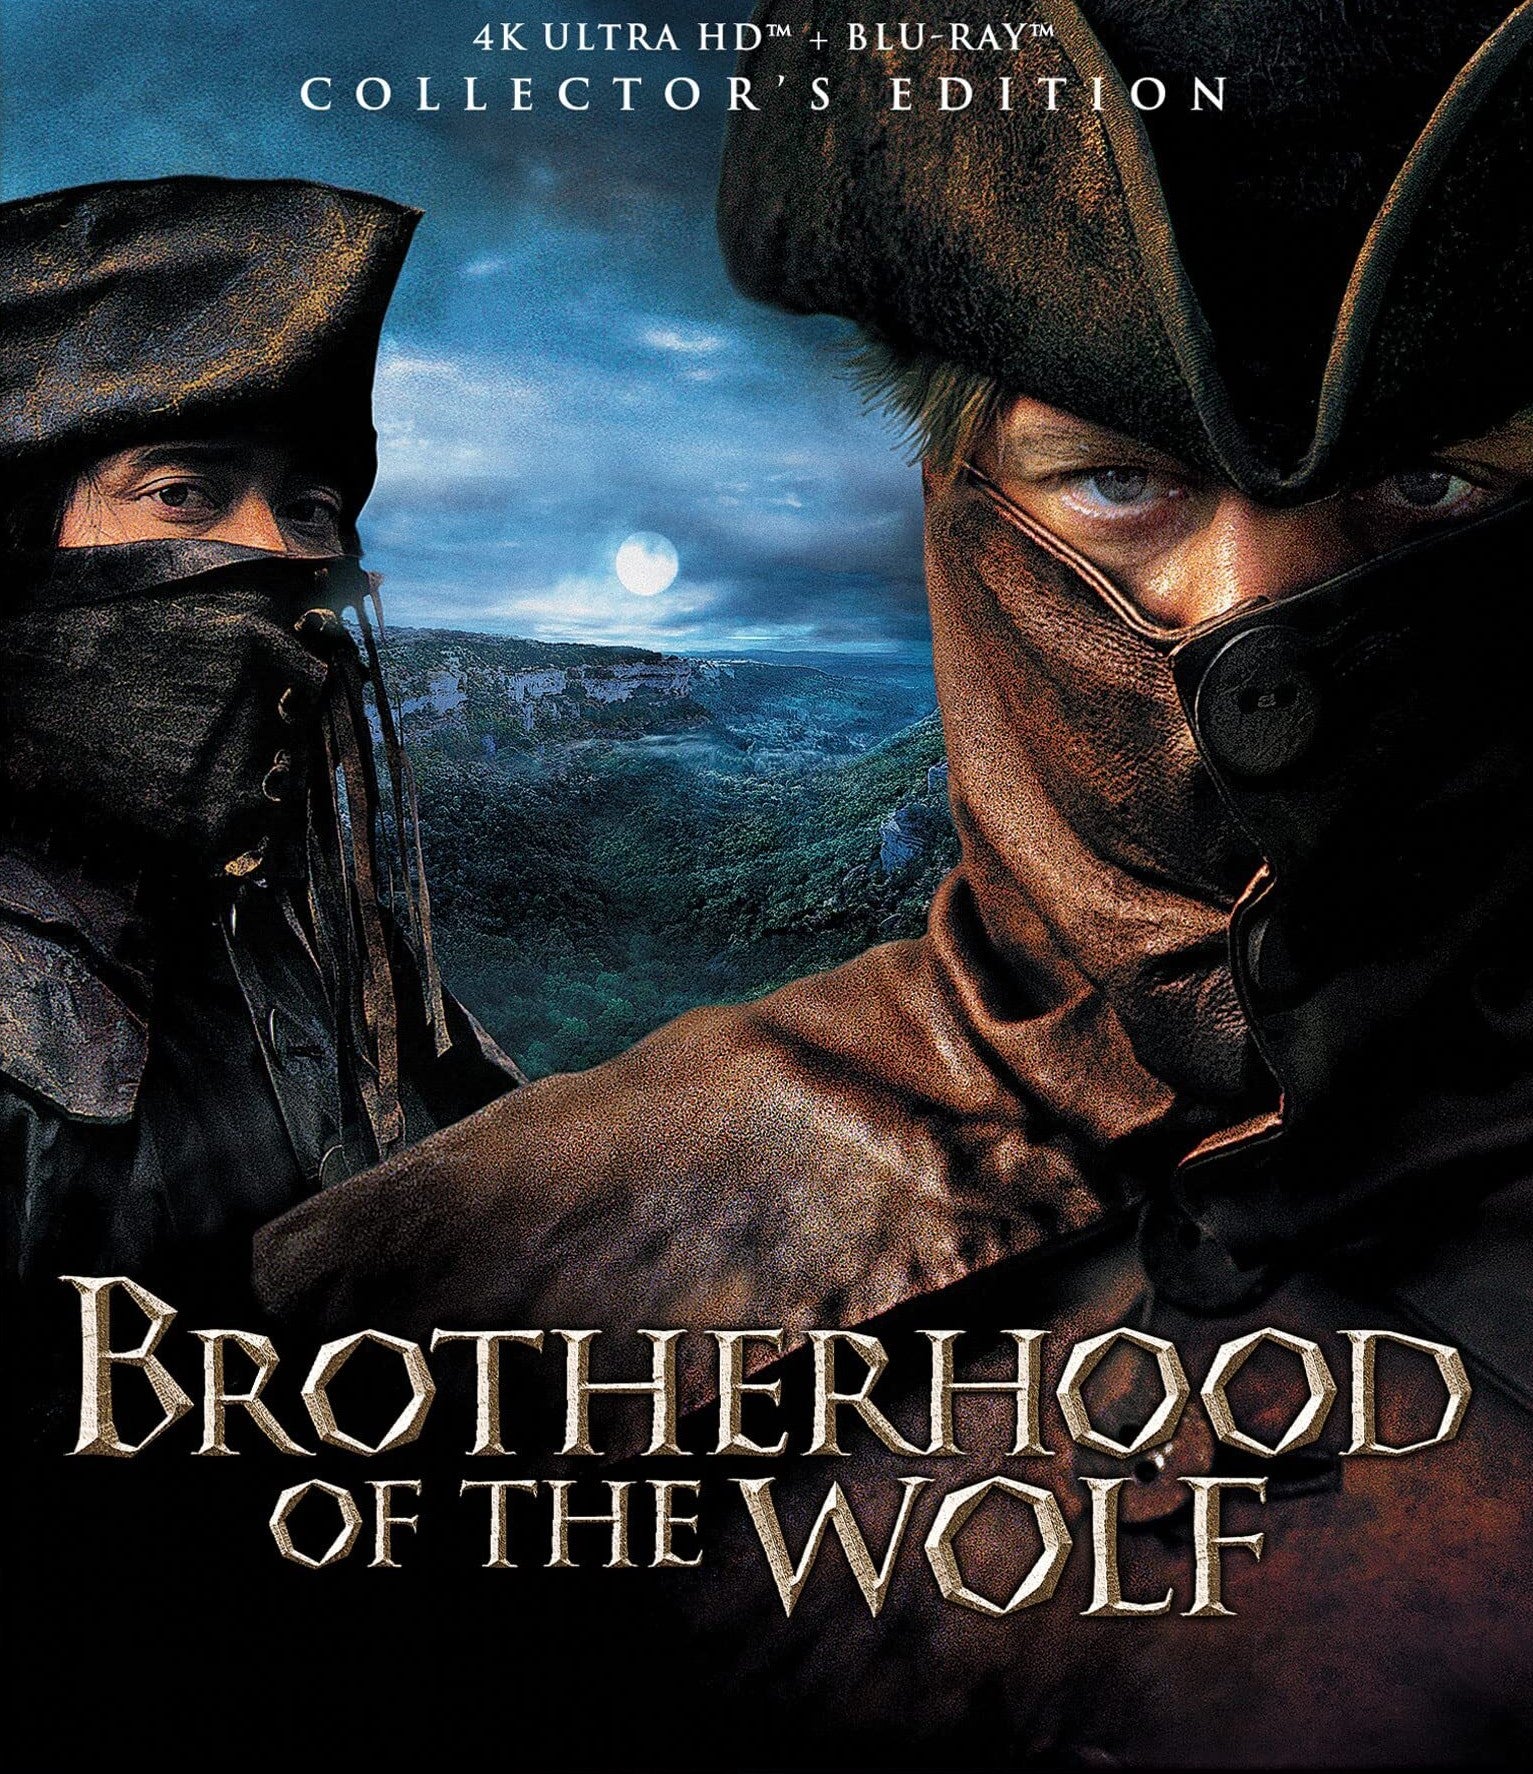 BROTHERHOOD OF THE WOLF (COLLECTOR'S EDITION) 4K UHD/BLU-RAY